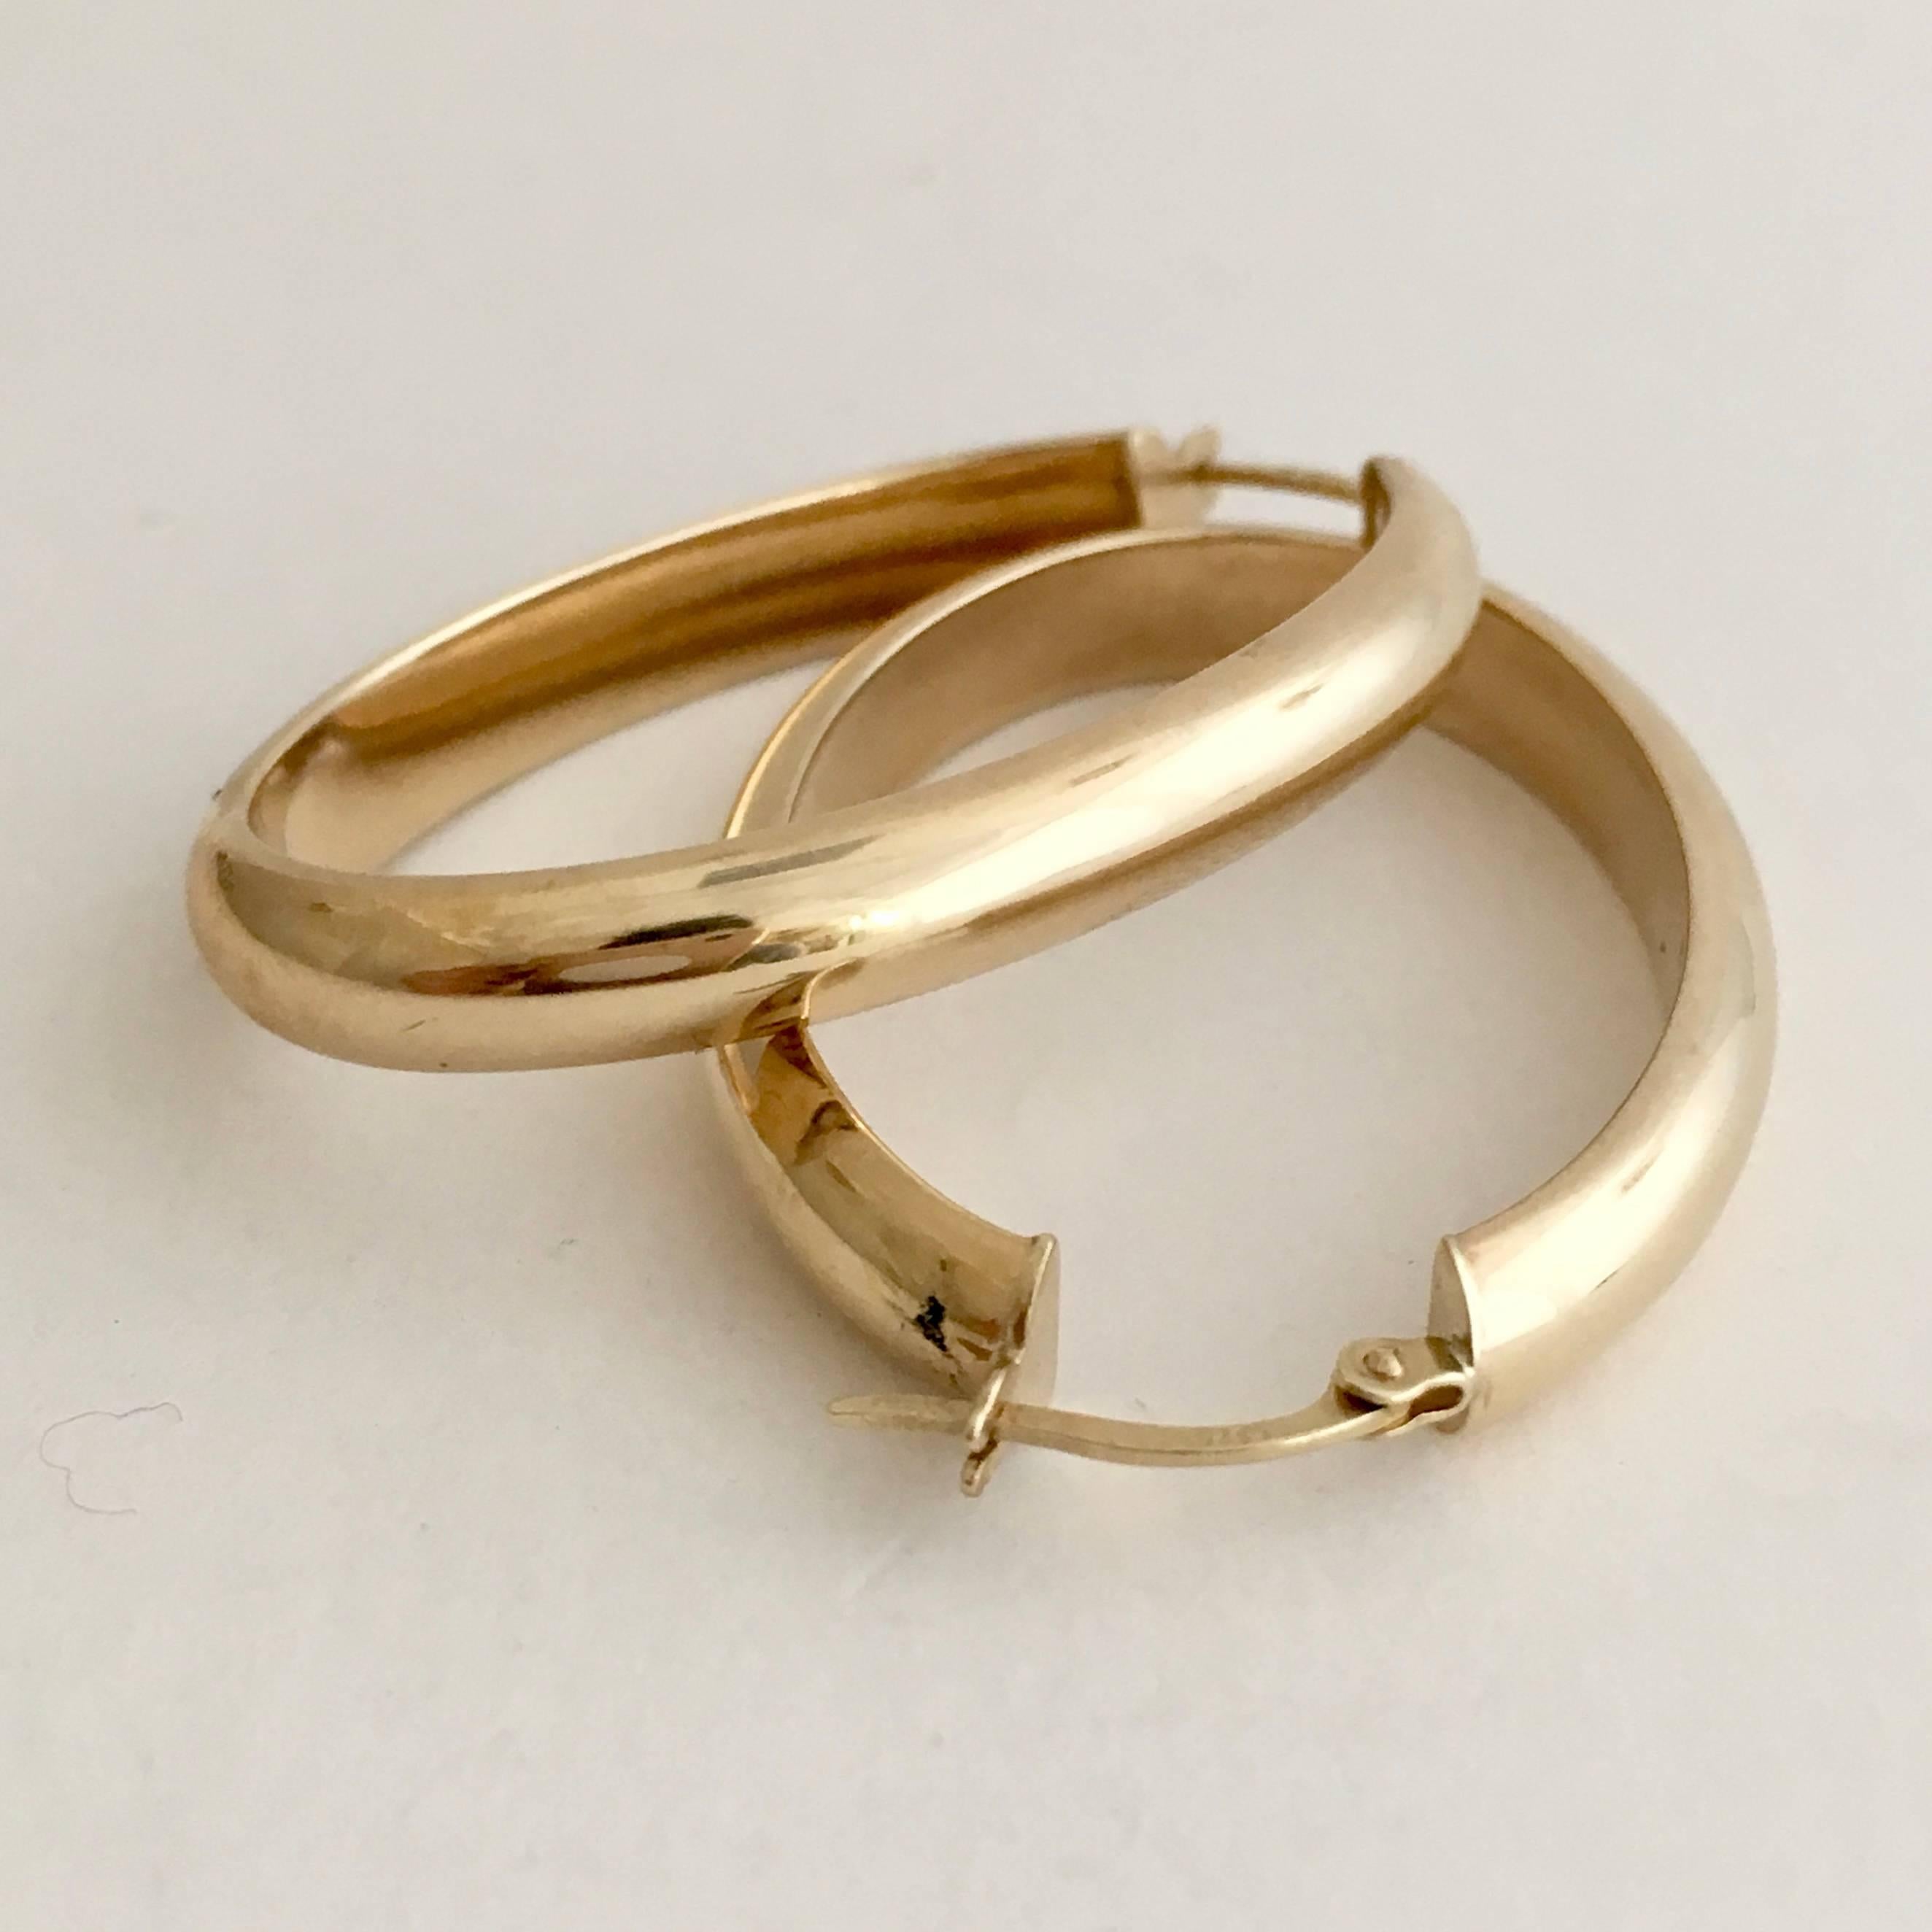 Women's or Men's Gold Hoops Vintage Jewelry Large Elongated Oval Statement Hoop Earrings